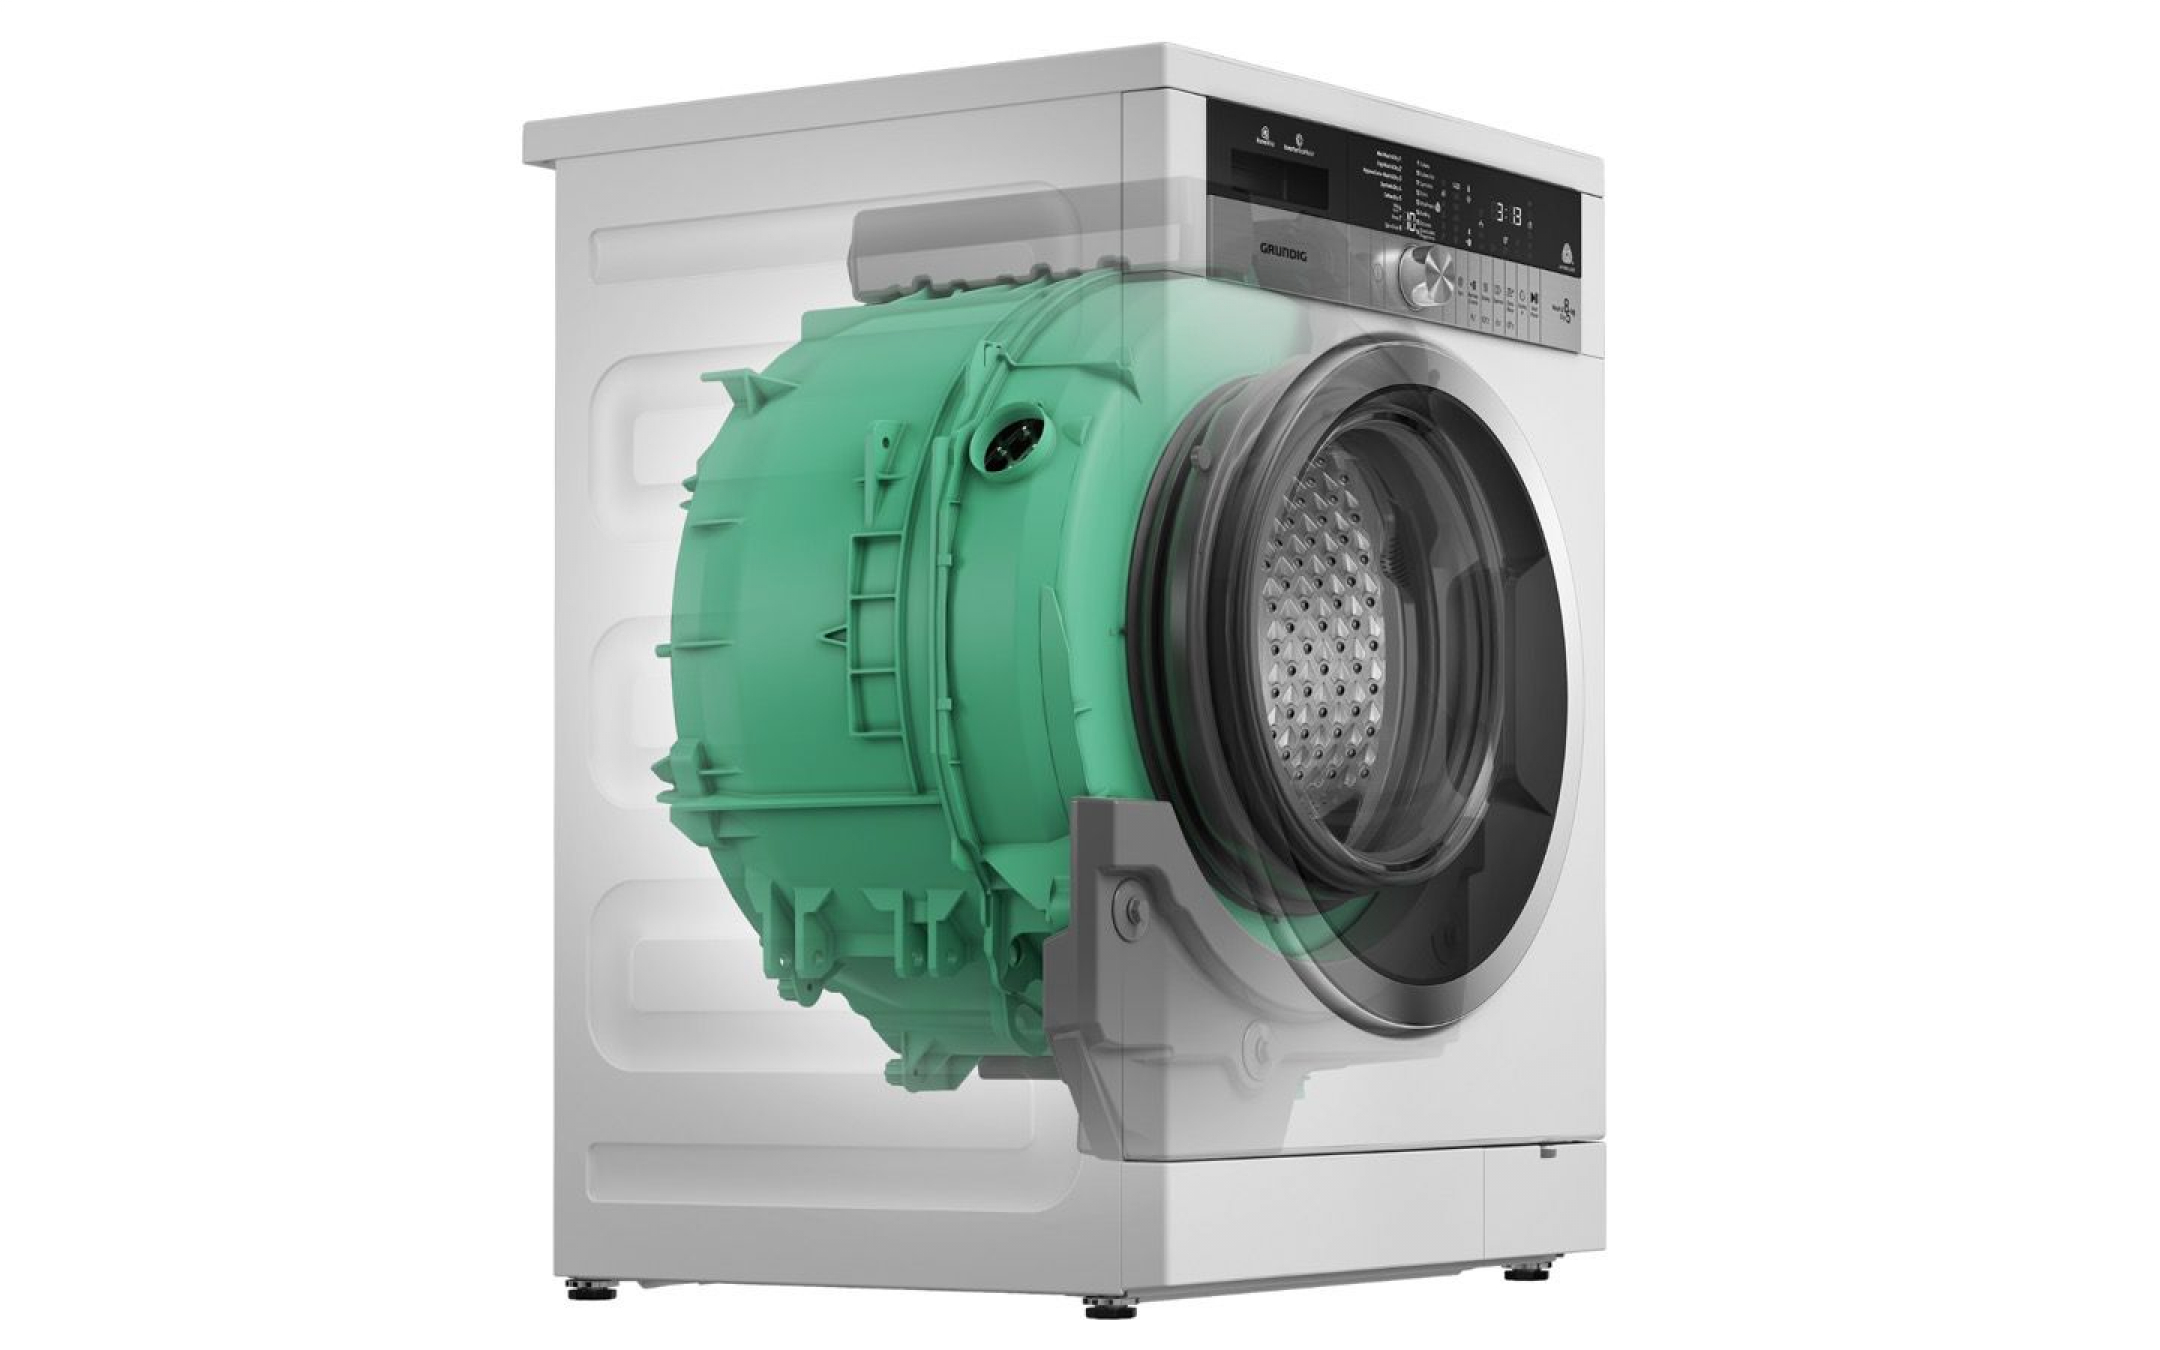 Edition 75 washer-dryer